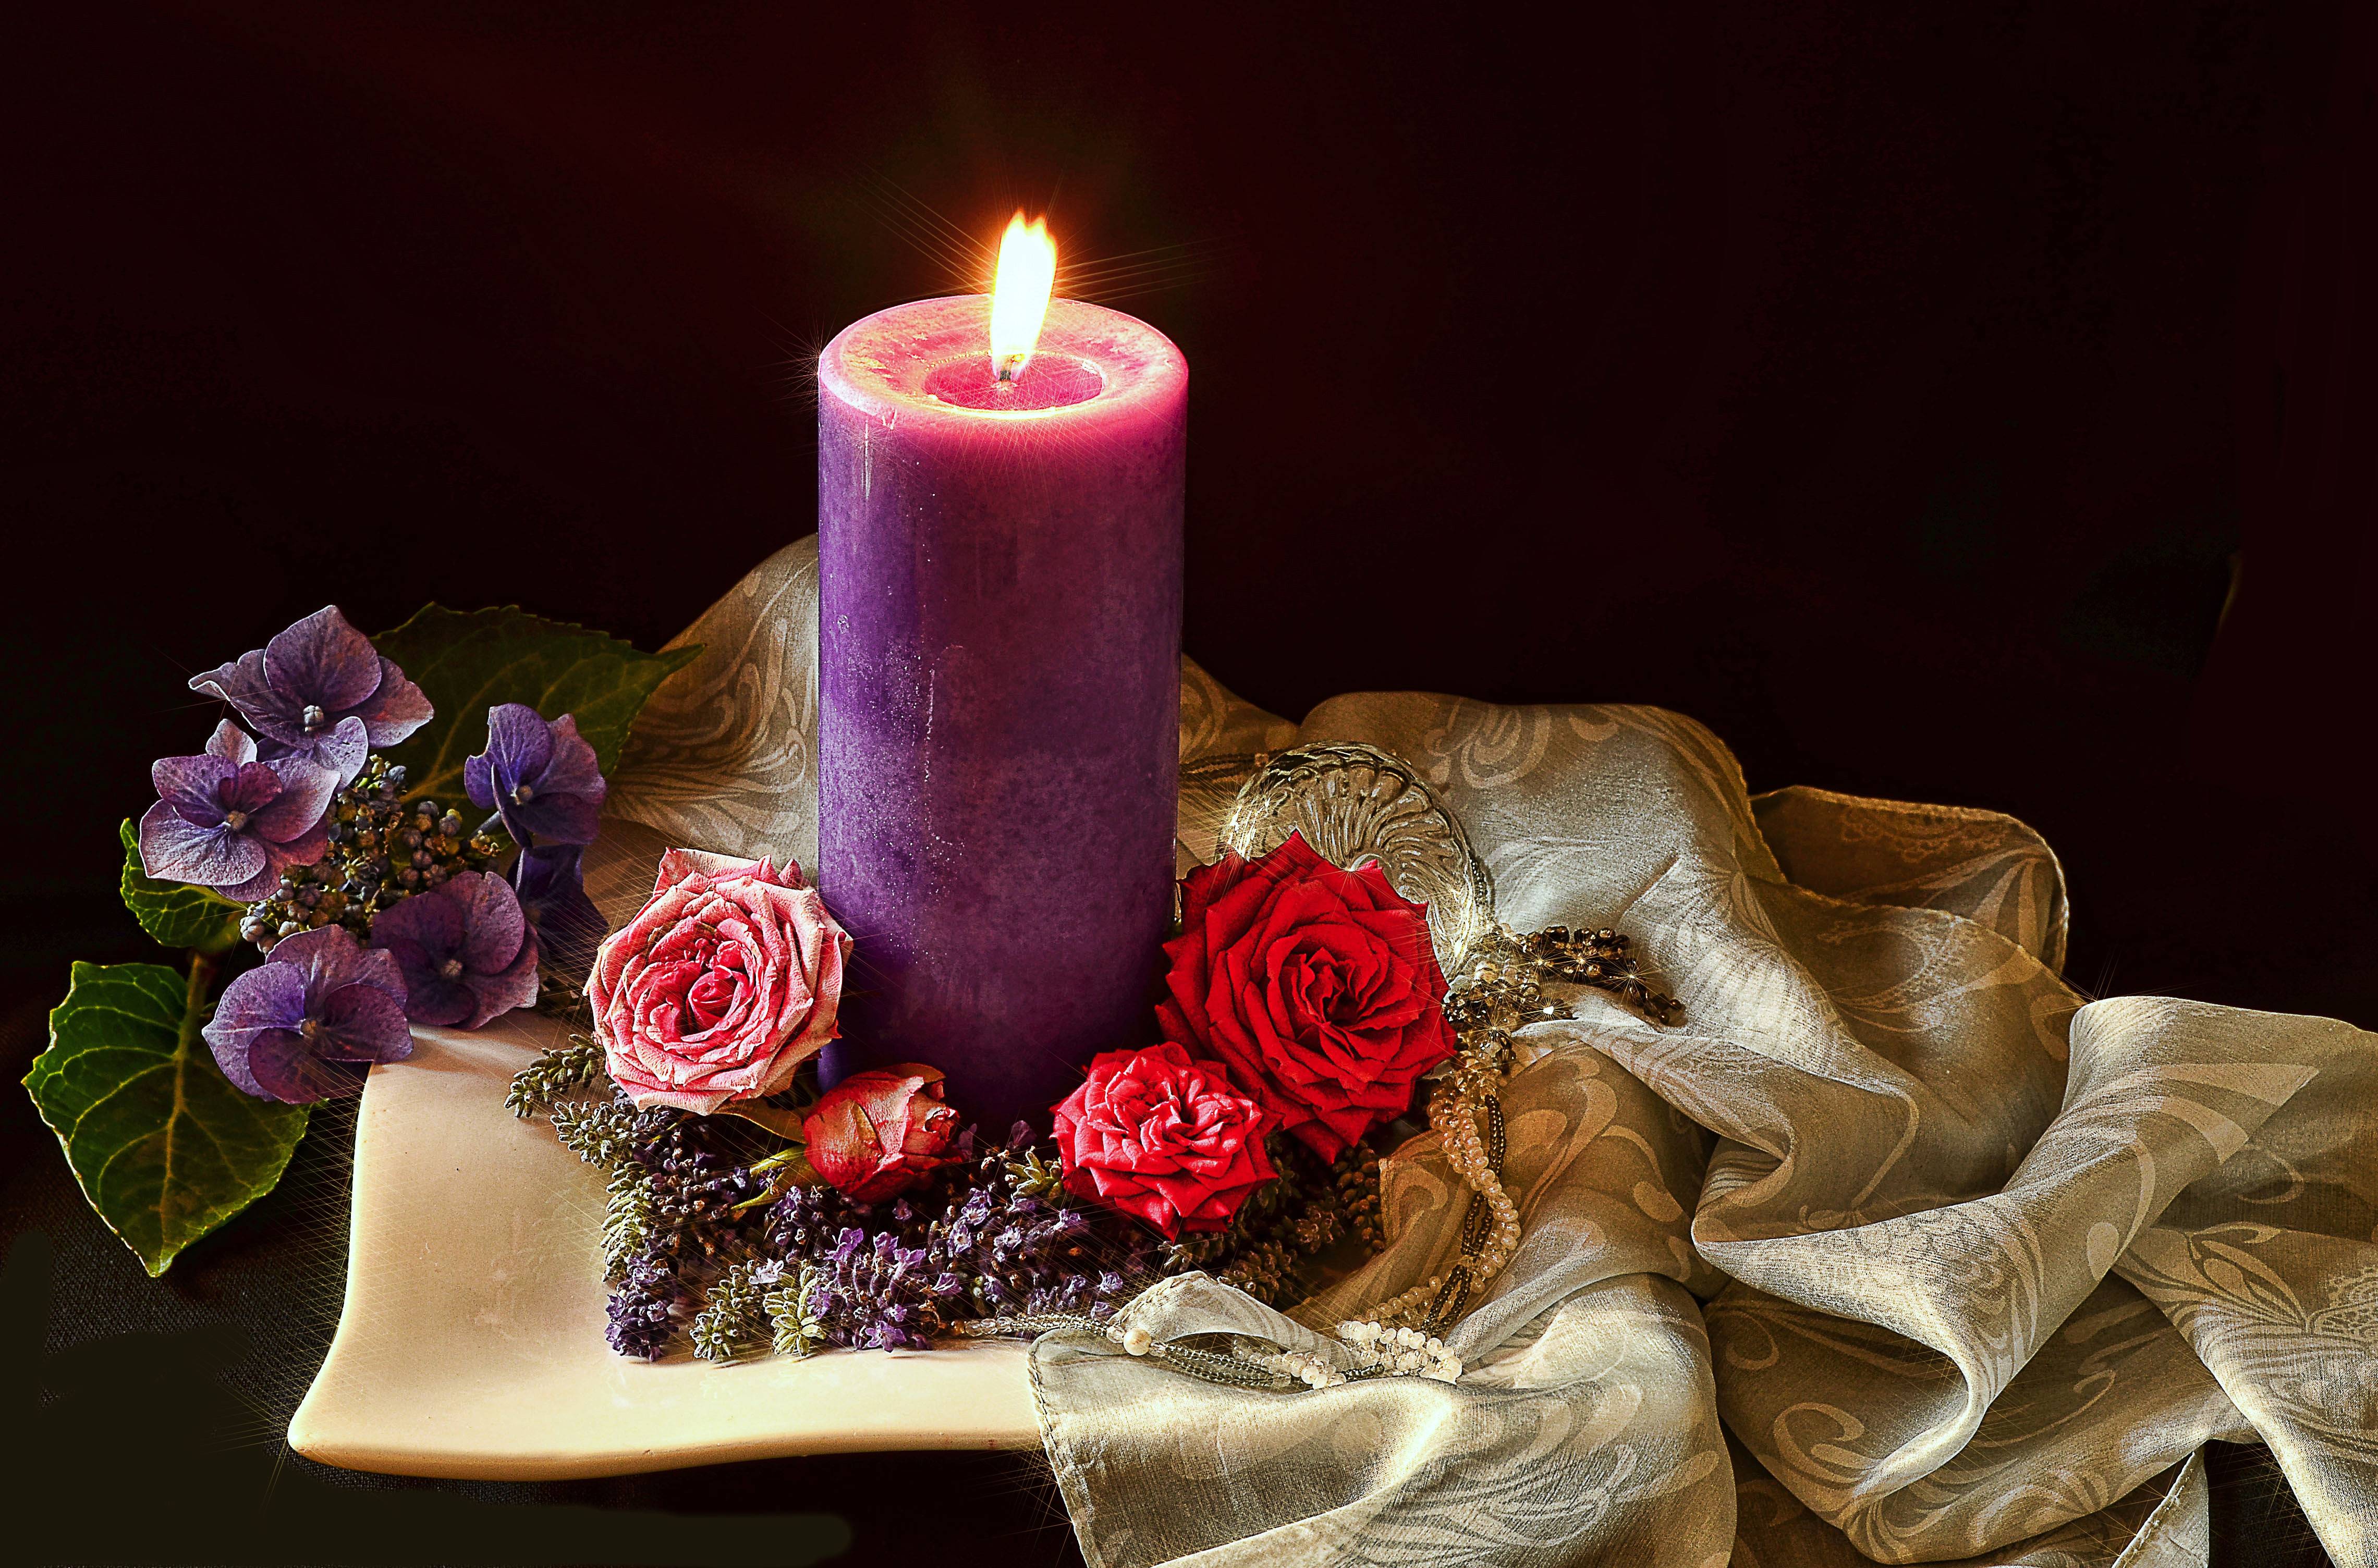 Горит красивая свеча. Красивые свечи. Свечи с цветами. Волшебная свеча. Красивые горящие свечи.